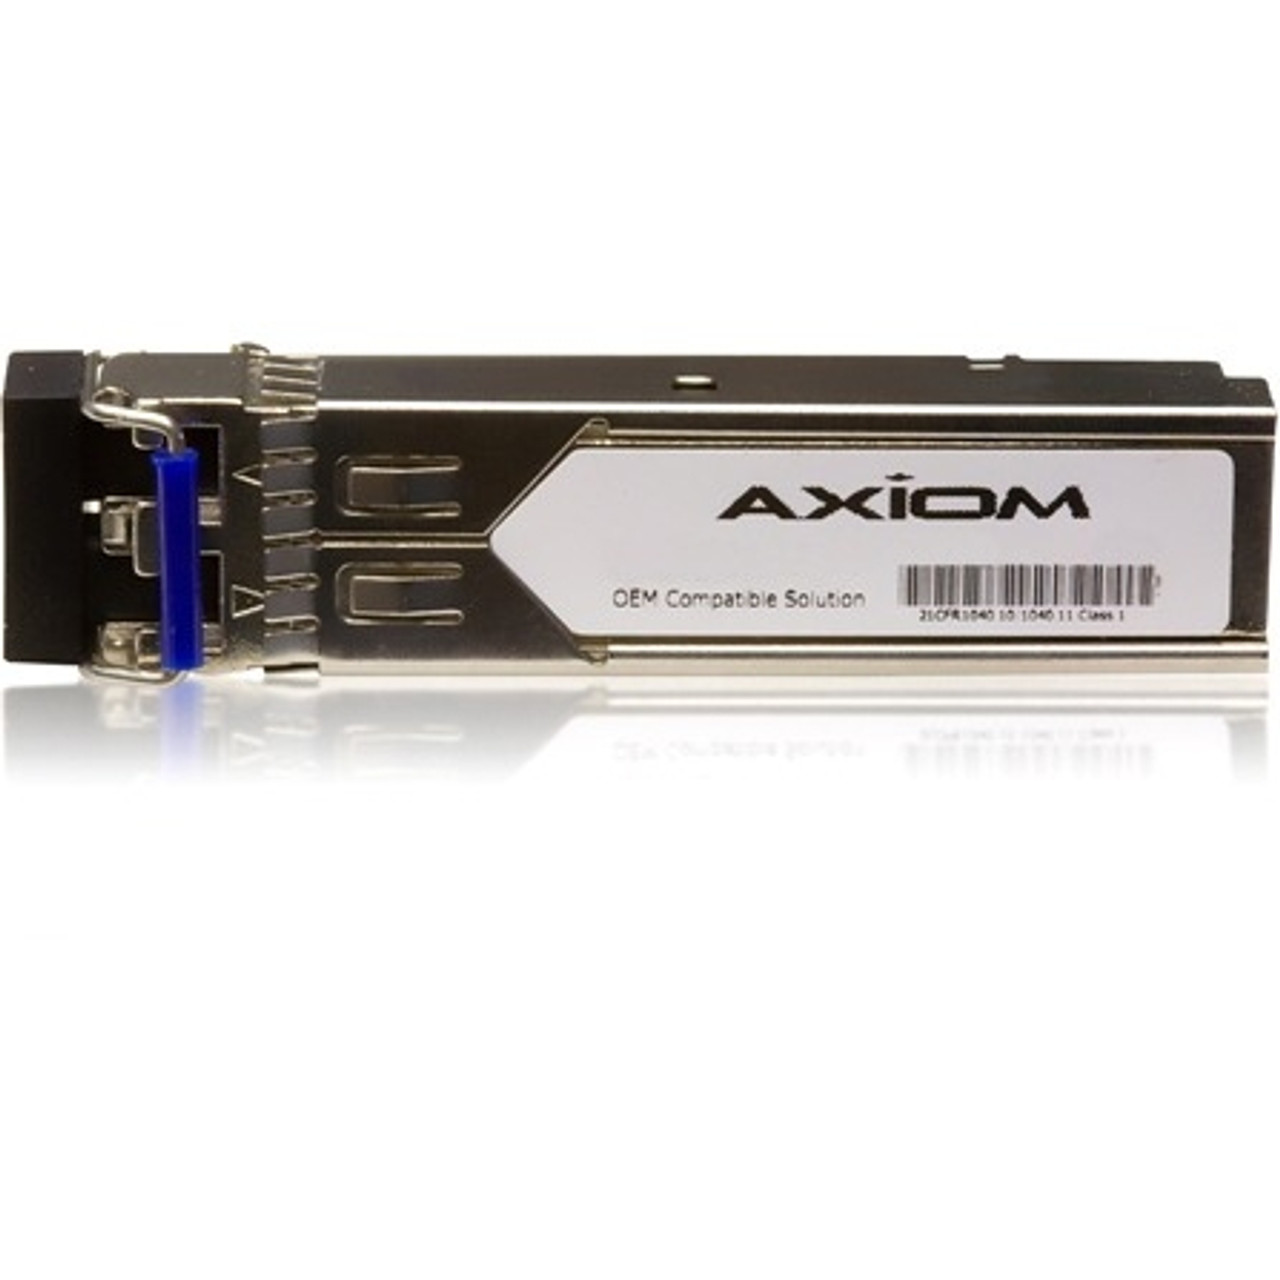 FTLF8519P3BN-AX Axiom 2Gbps 1000Base-SX Multi-Mode Fiber 500m 850nm Fibre Channel SFP Transceiver Module